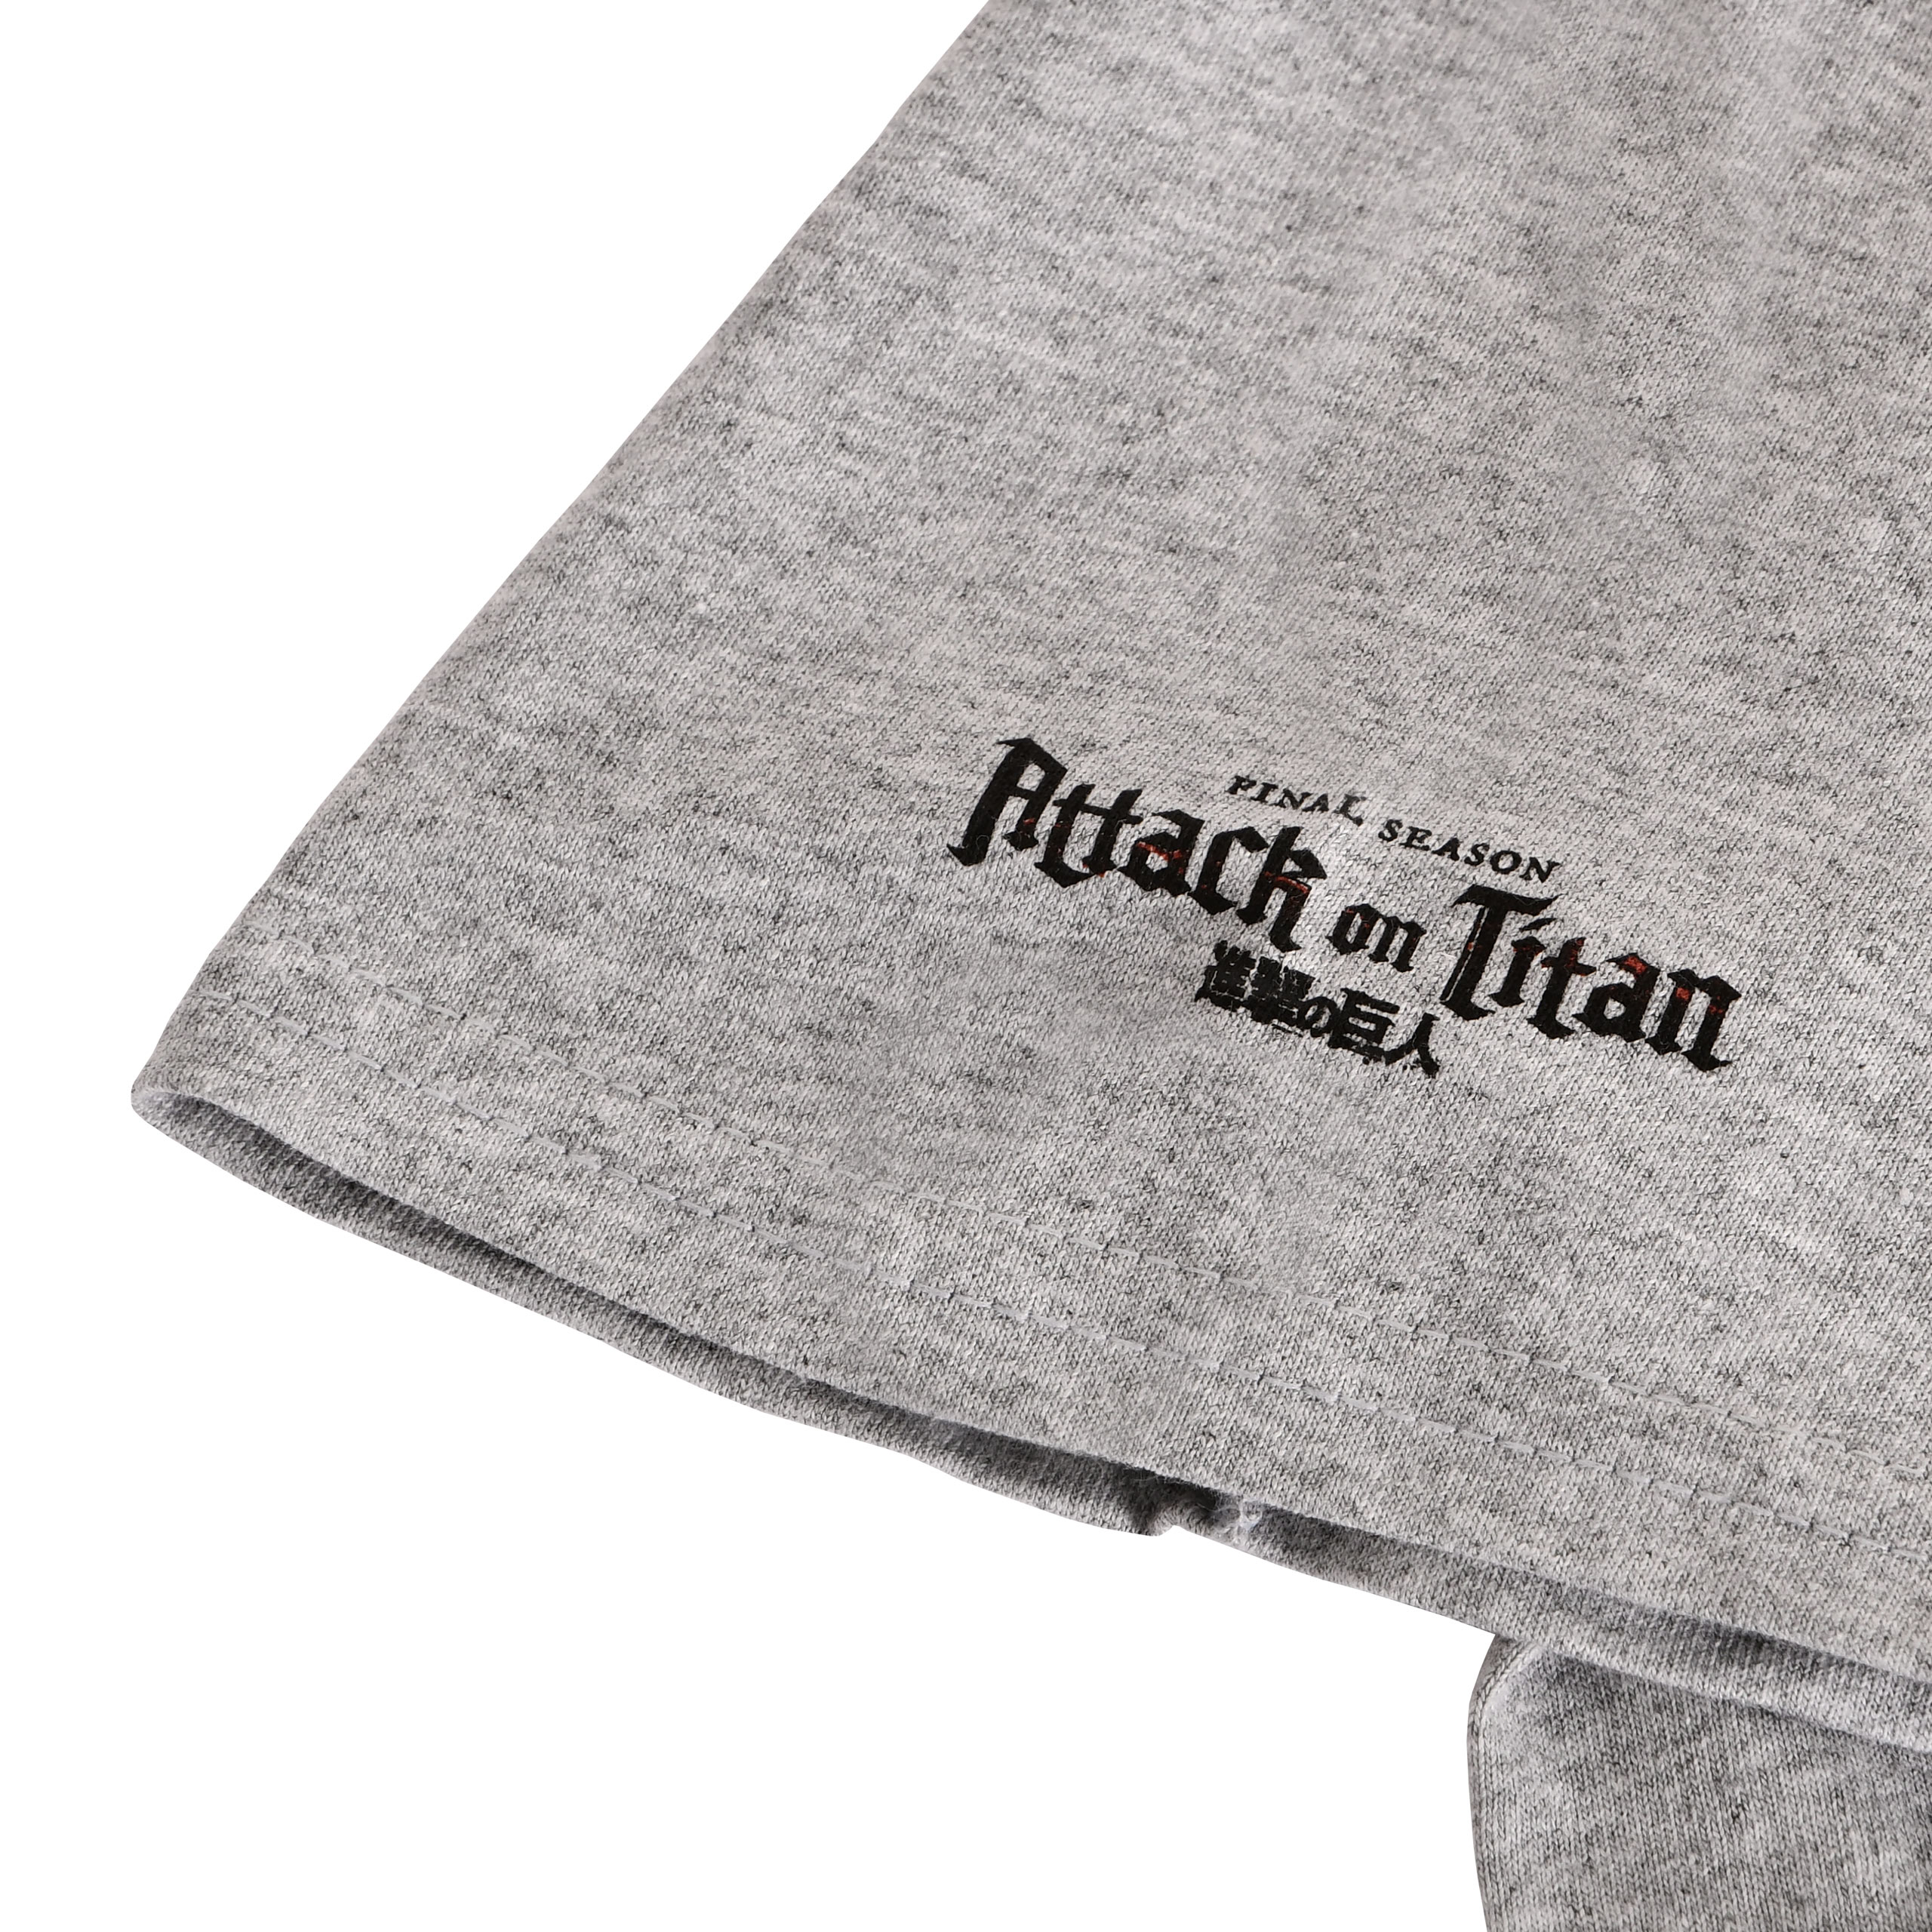 Attack on Titan - Groep T-Shirt grijs